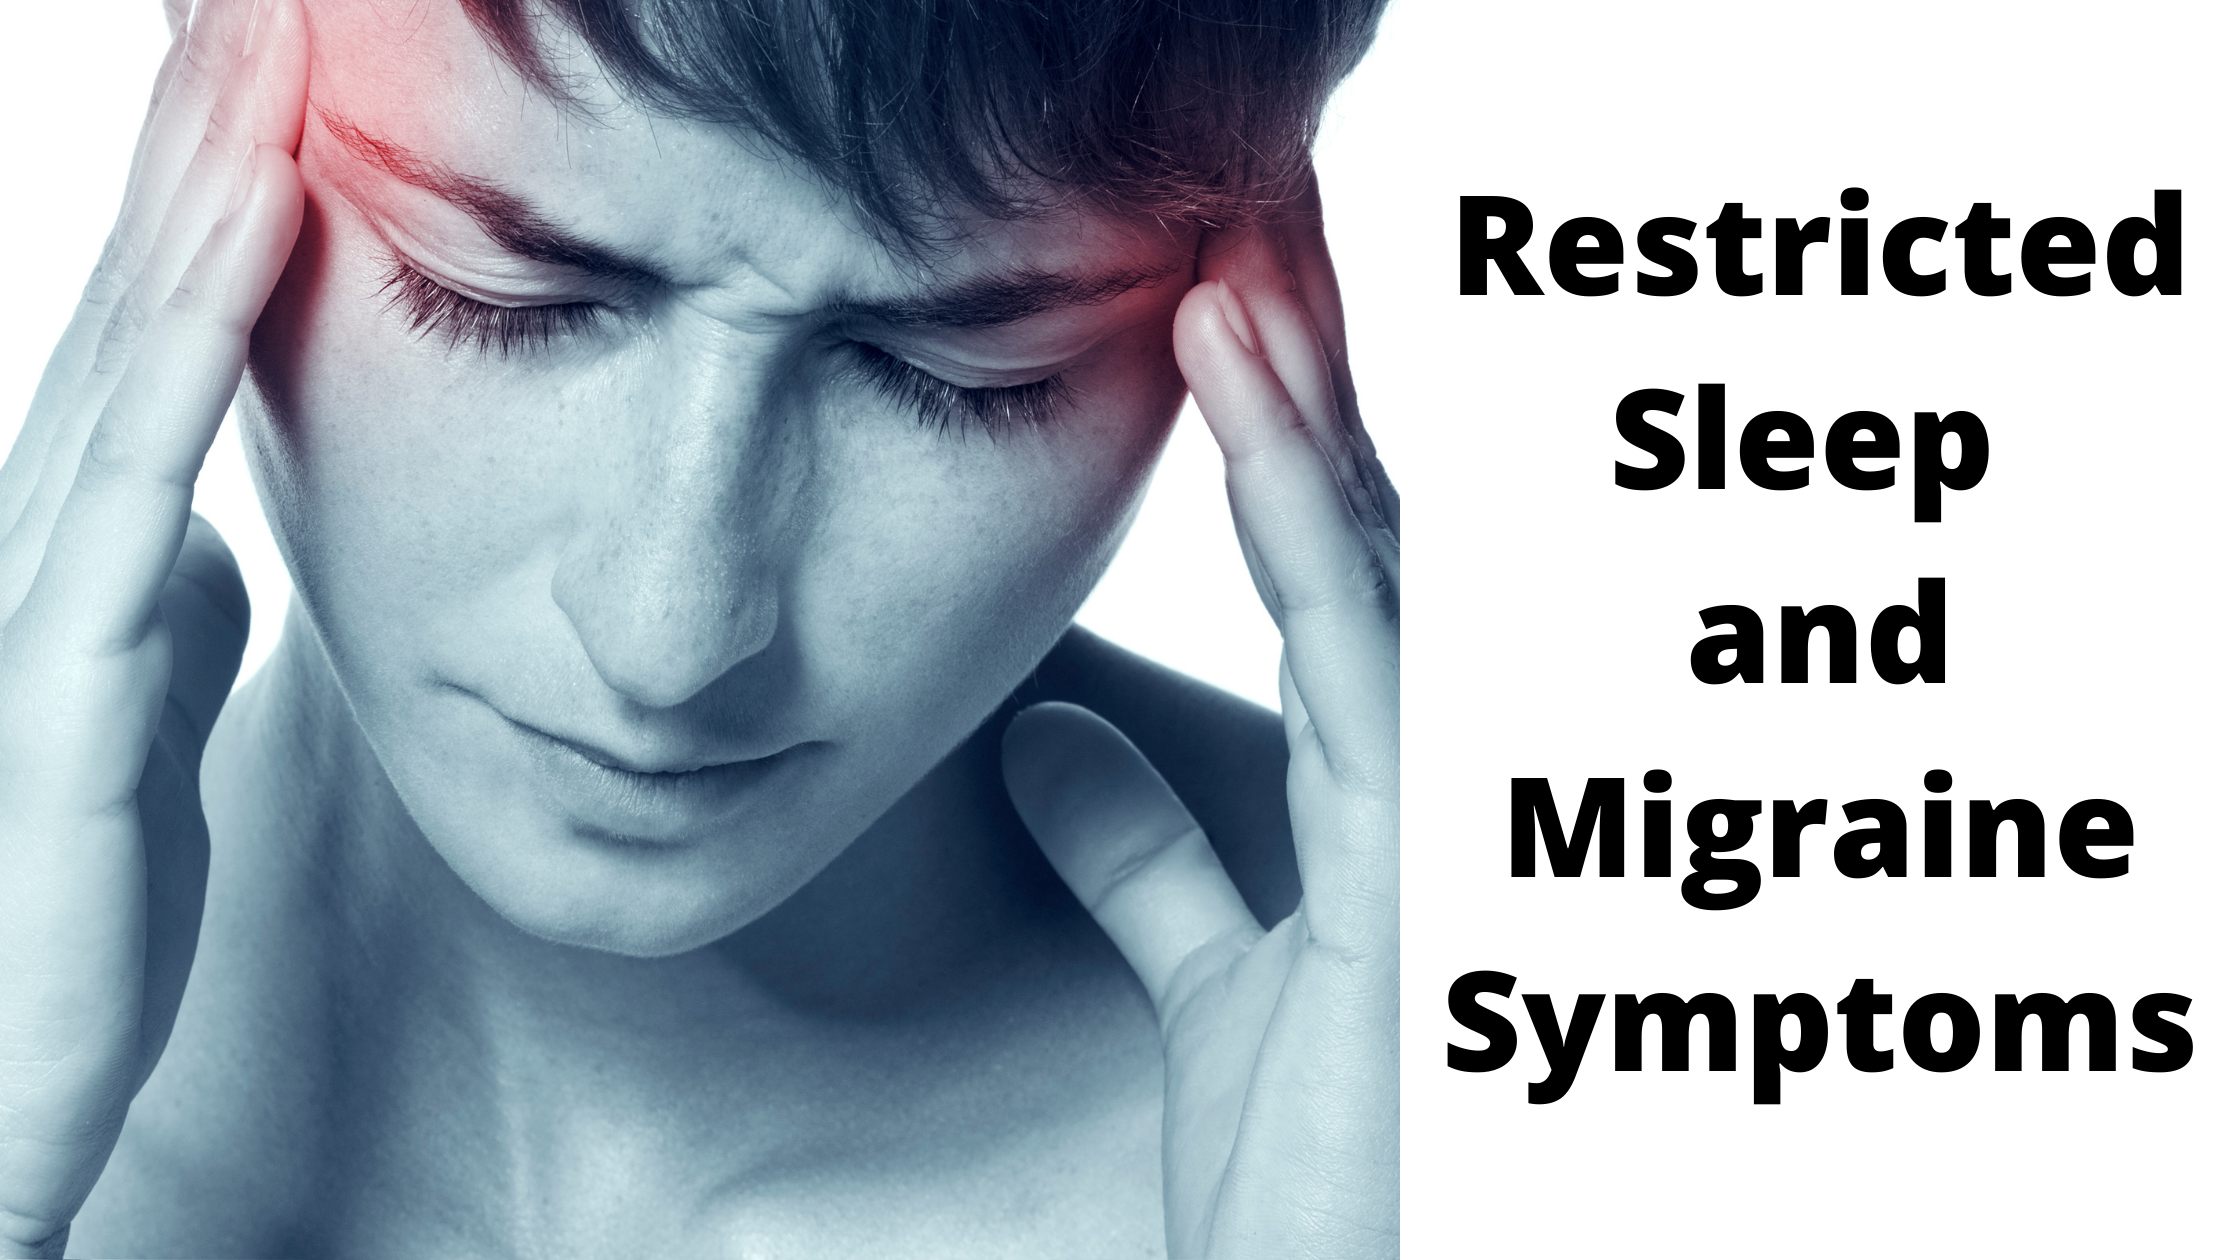 Restricted Sleep and Migraine Symptoms